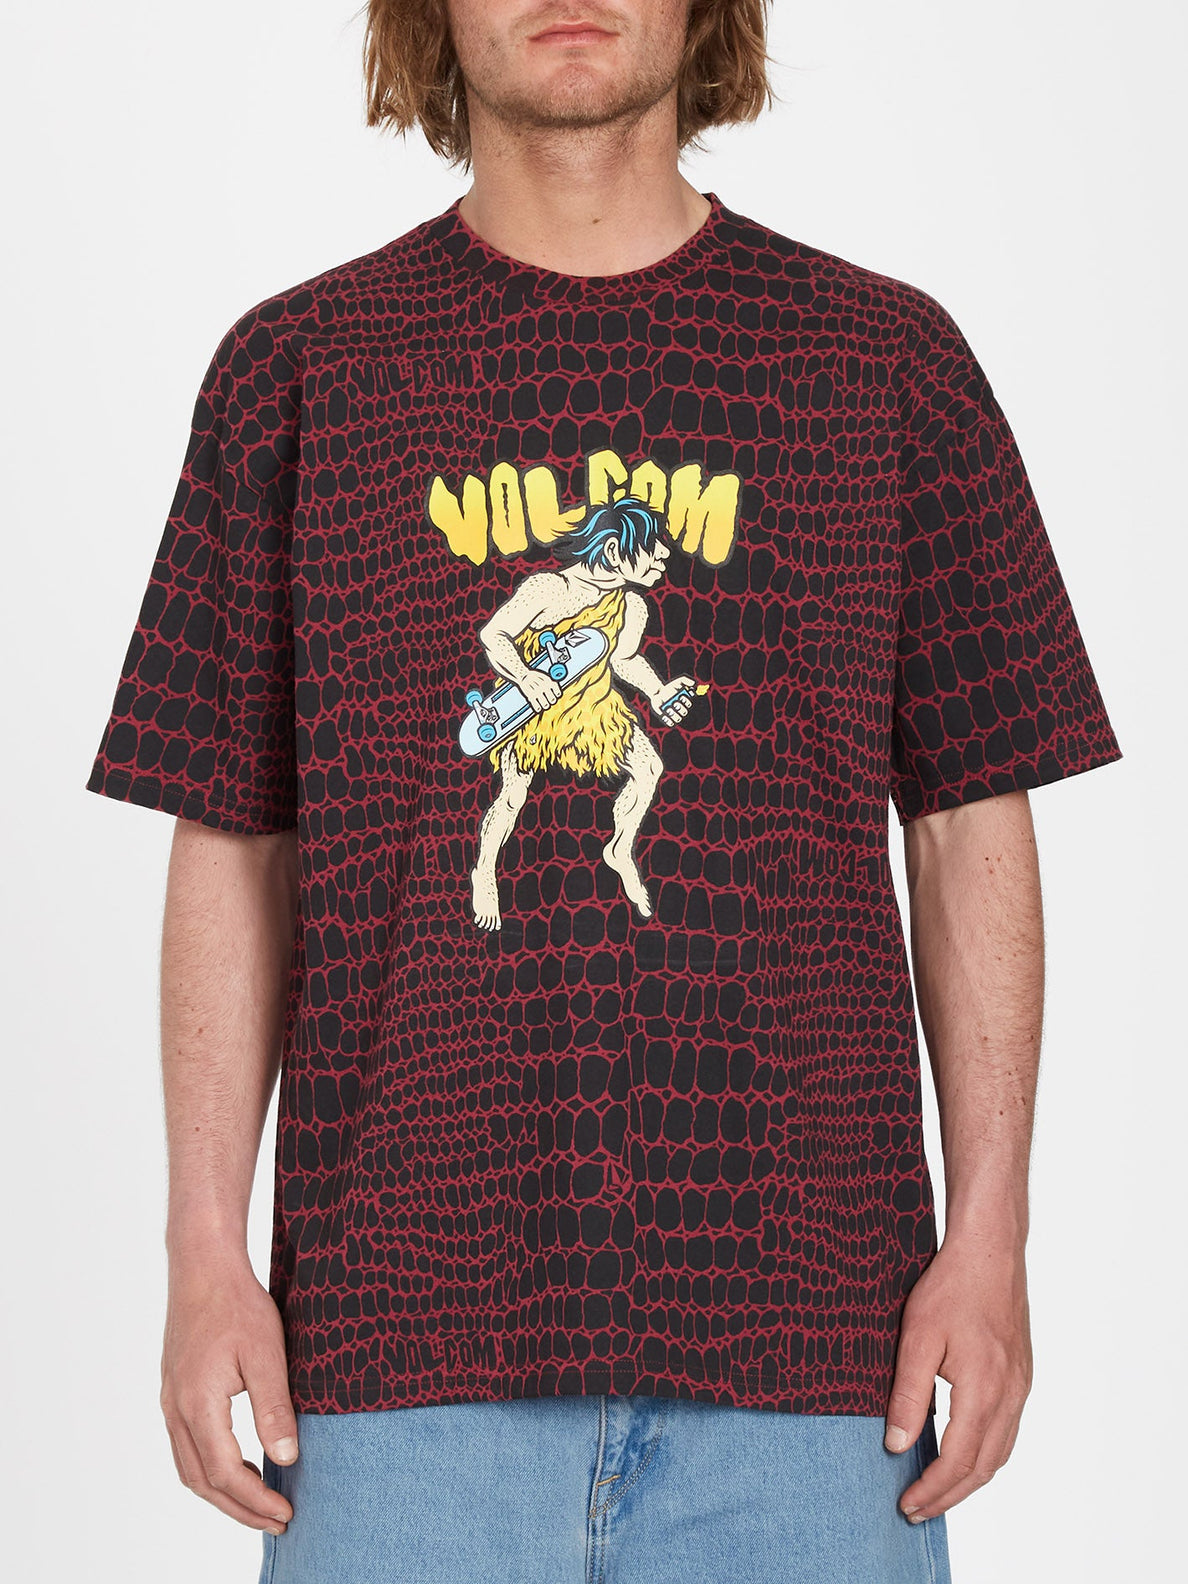 Camiseta Volcom Todd Bratrud 3 SS Print | Camisetas de hombre | Camisetas manga corta de hombre | Volcom Shop | surfdevils.com